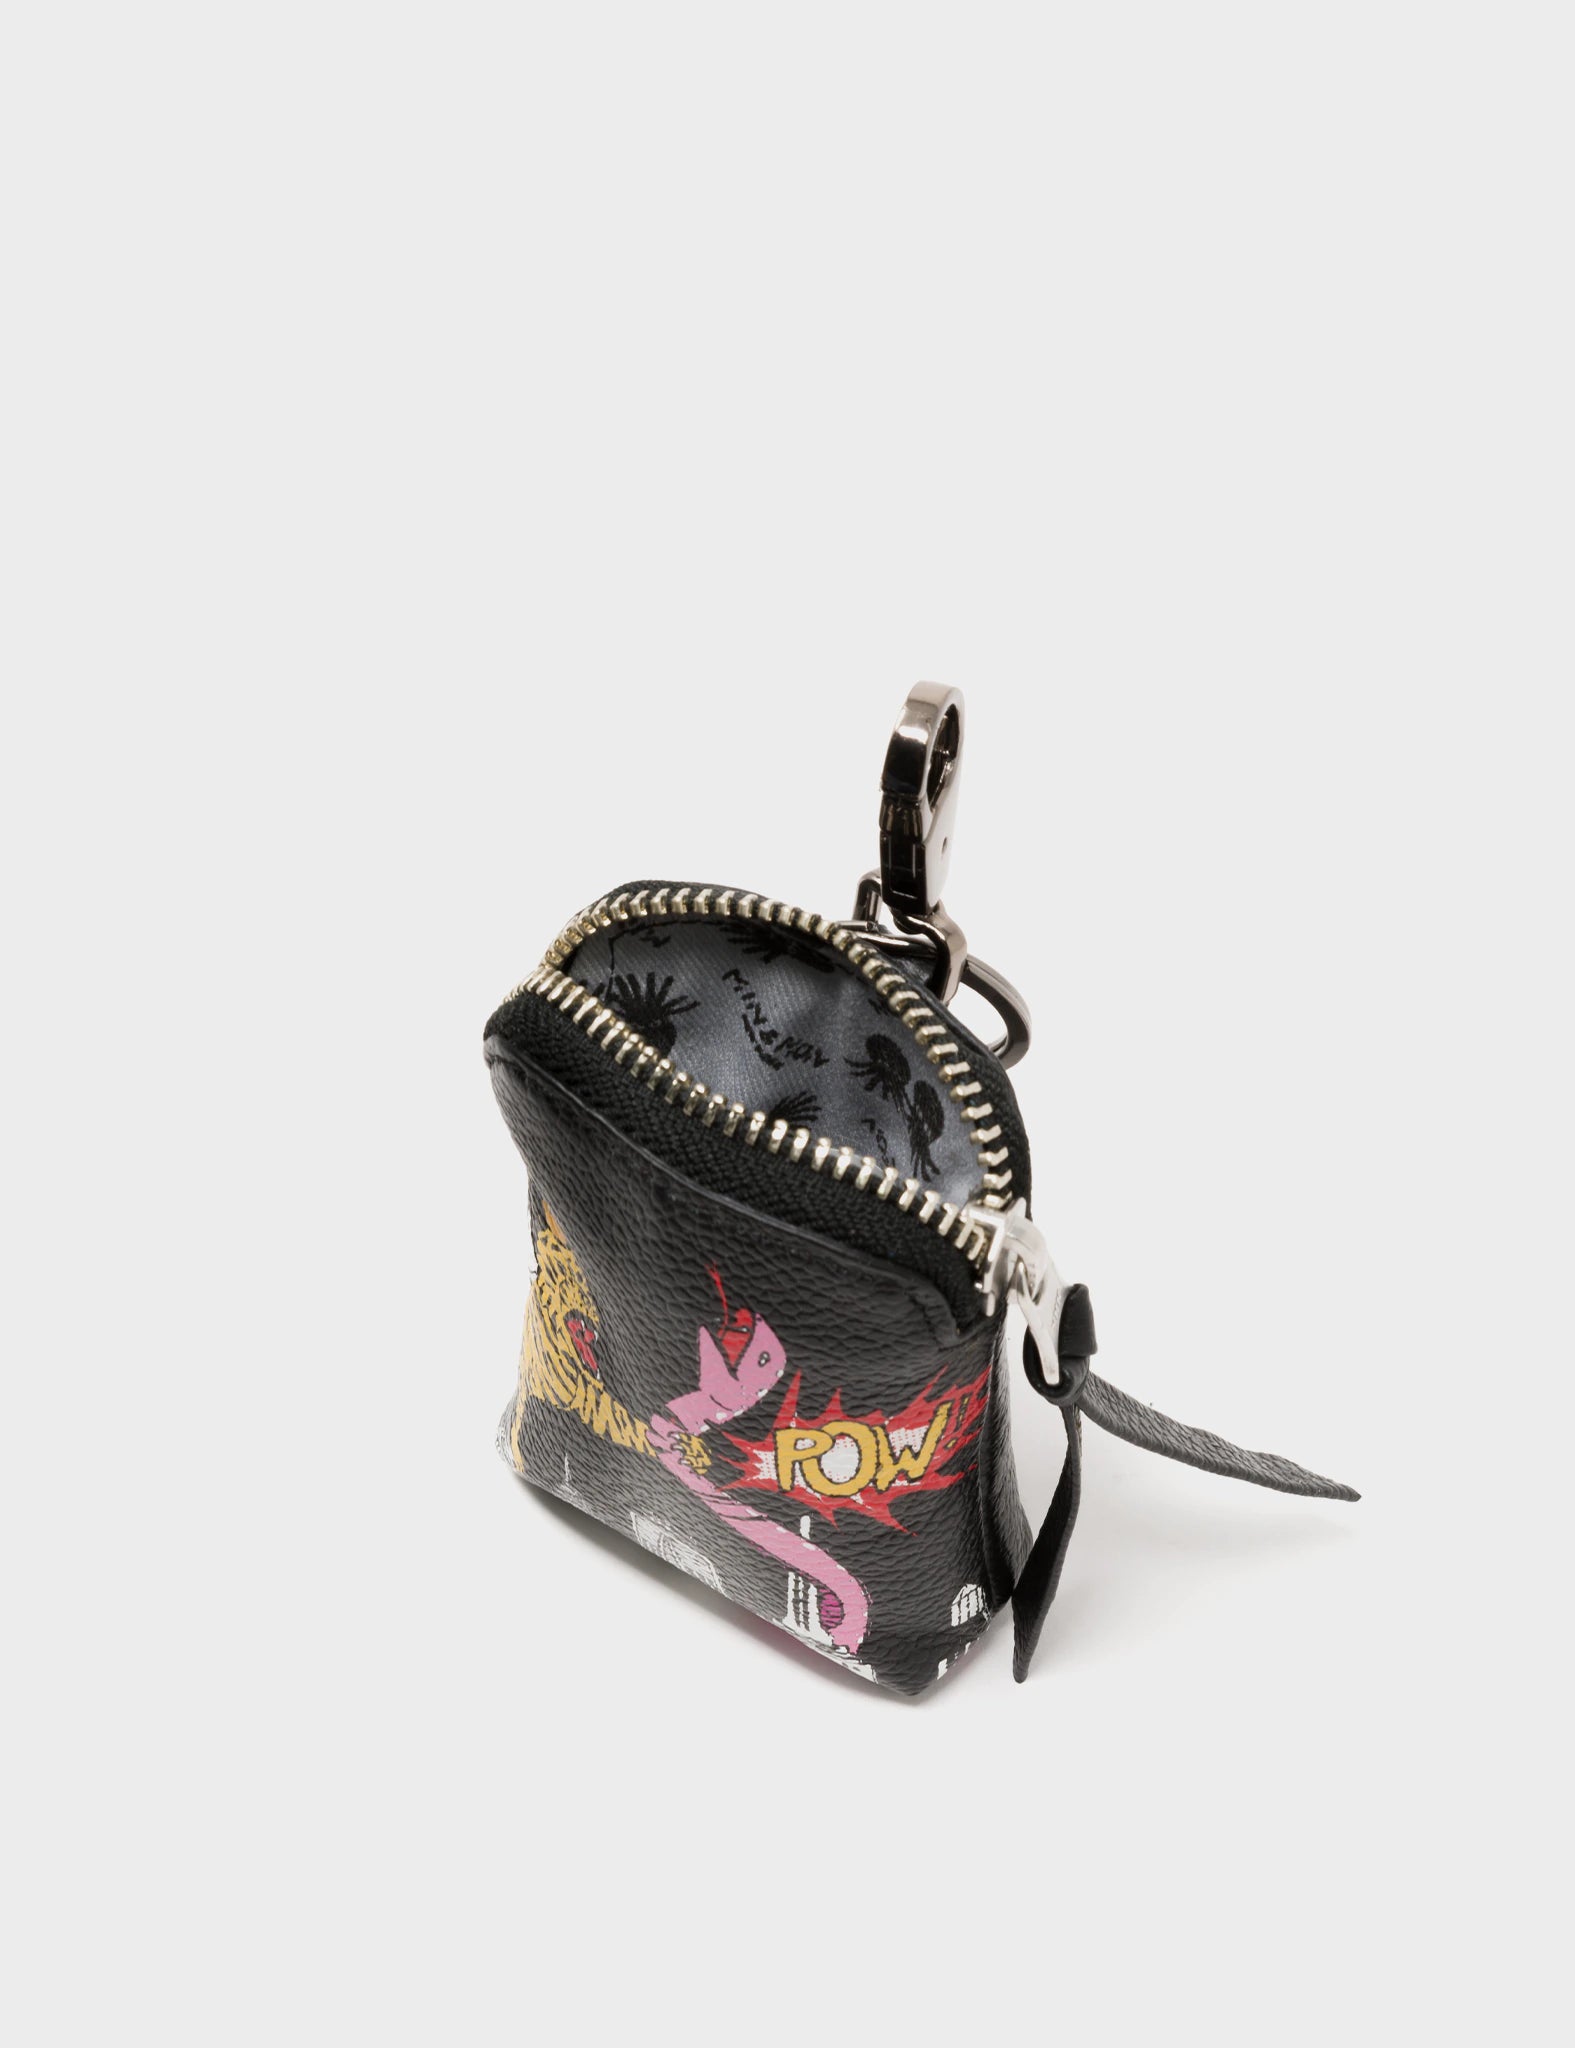 Giftale Women's Flower Bag Charms Enameled Keychain Purse Accessories | eBay